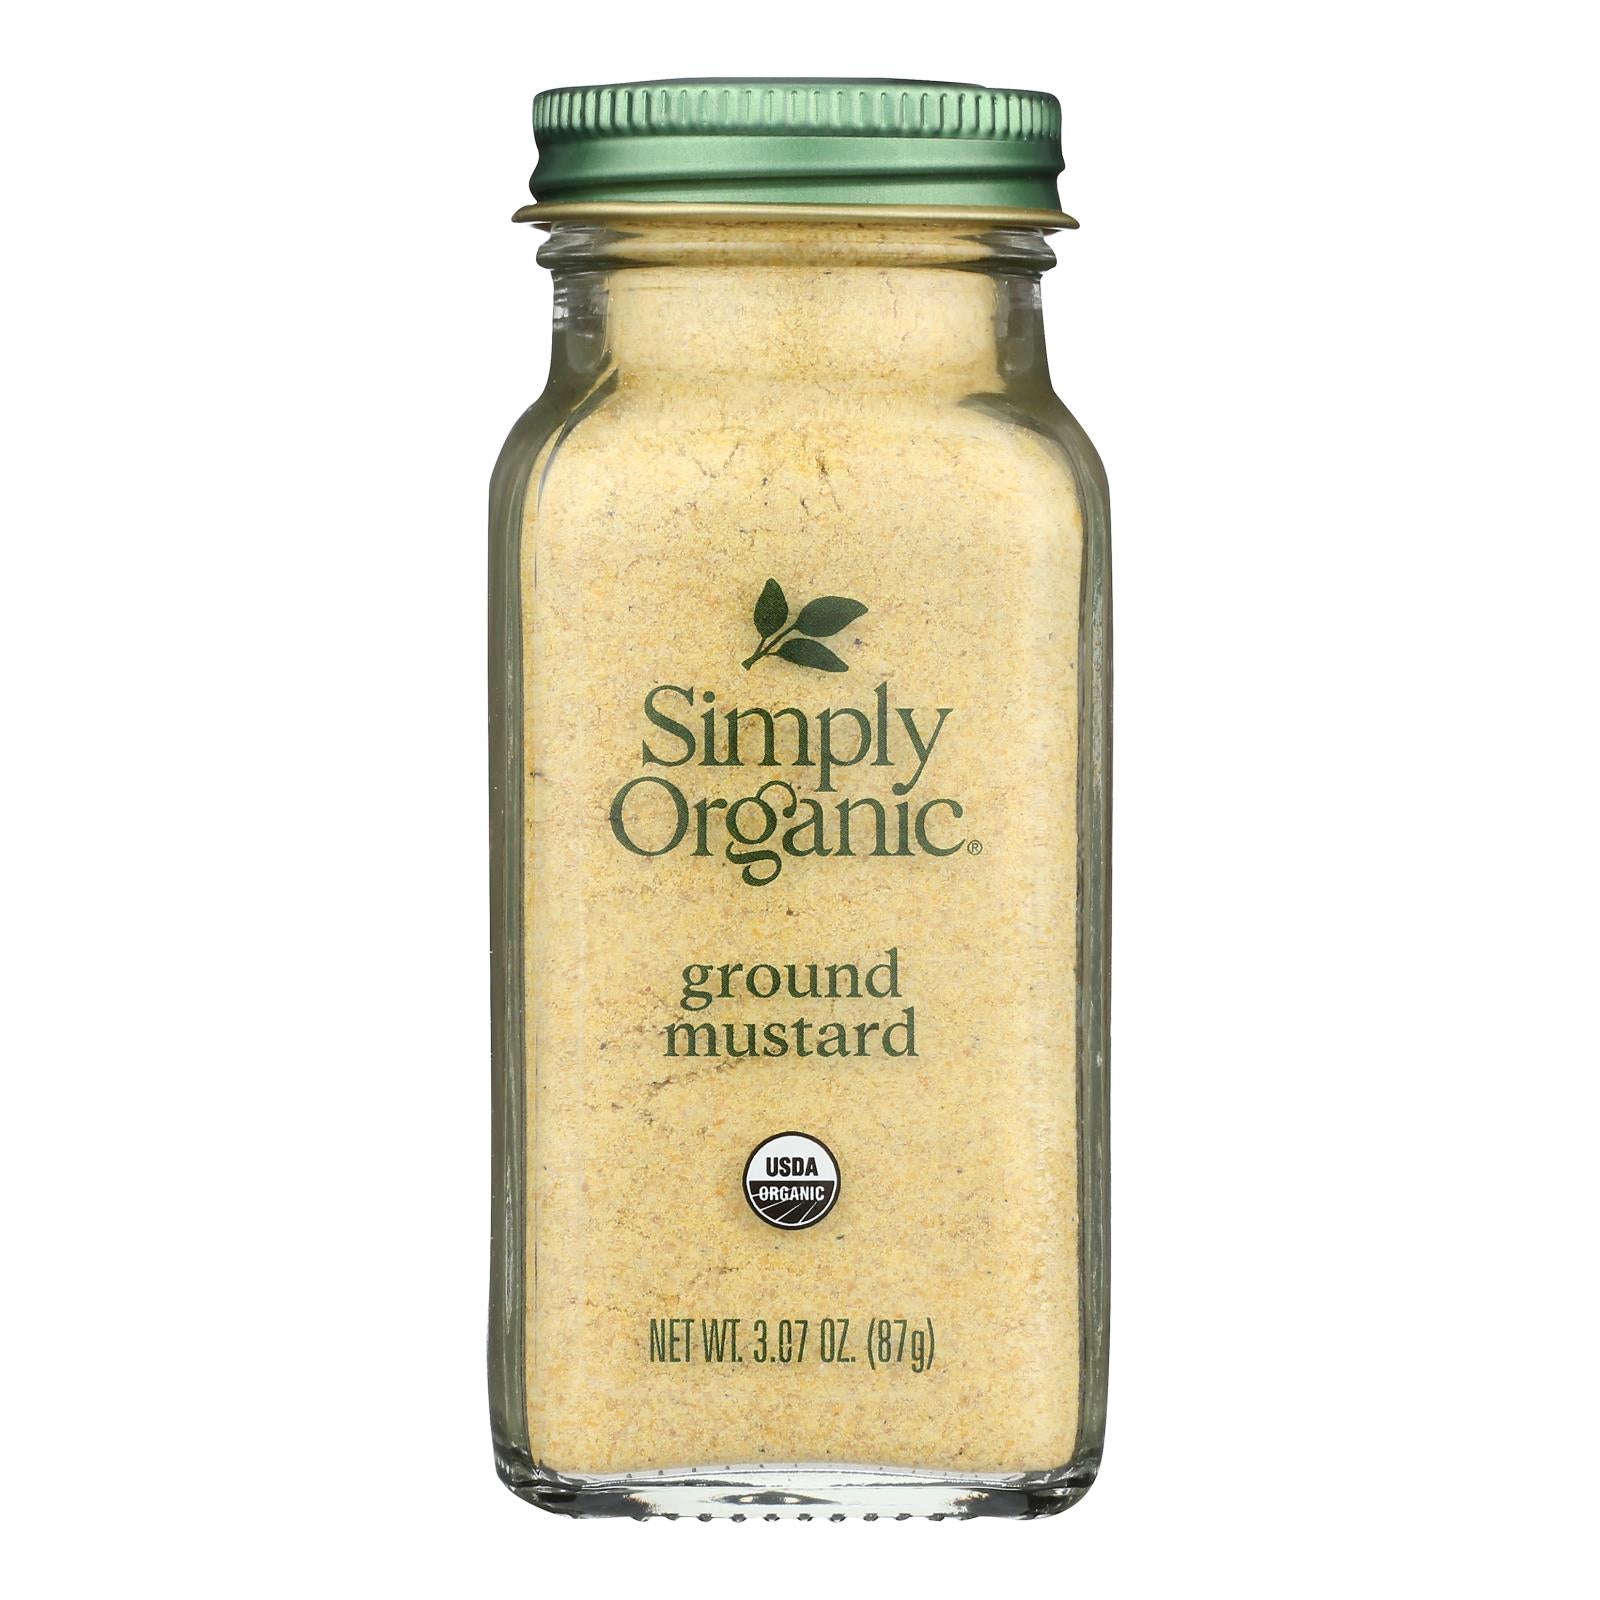 Simply Organic - Mustard Seed Ground Organic - Case of 6 - 3.07 Ounces